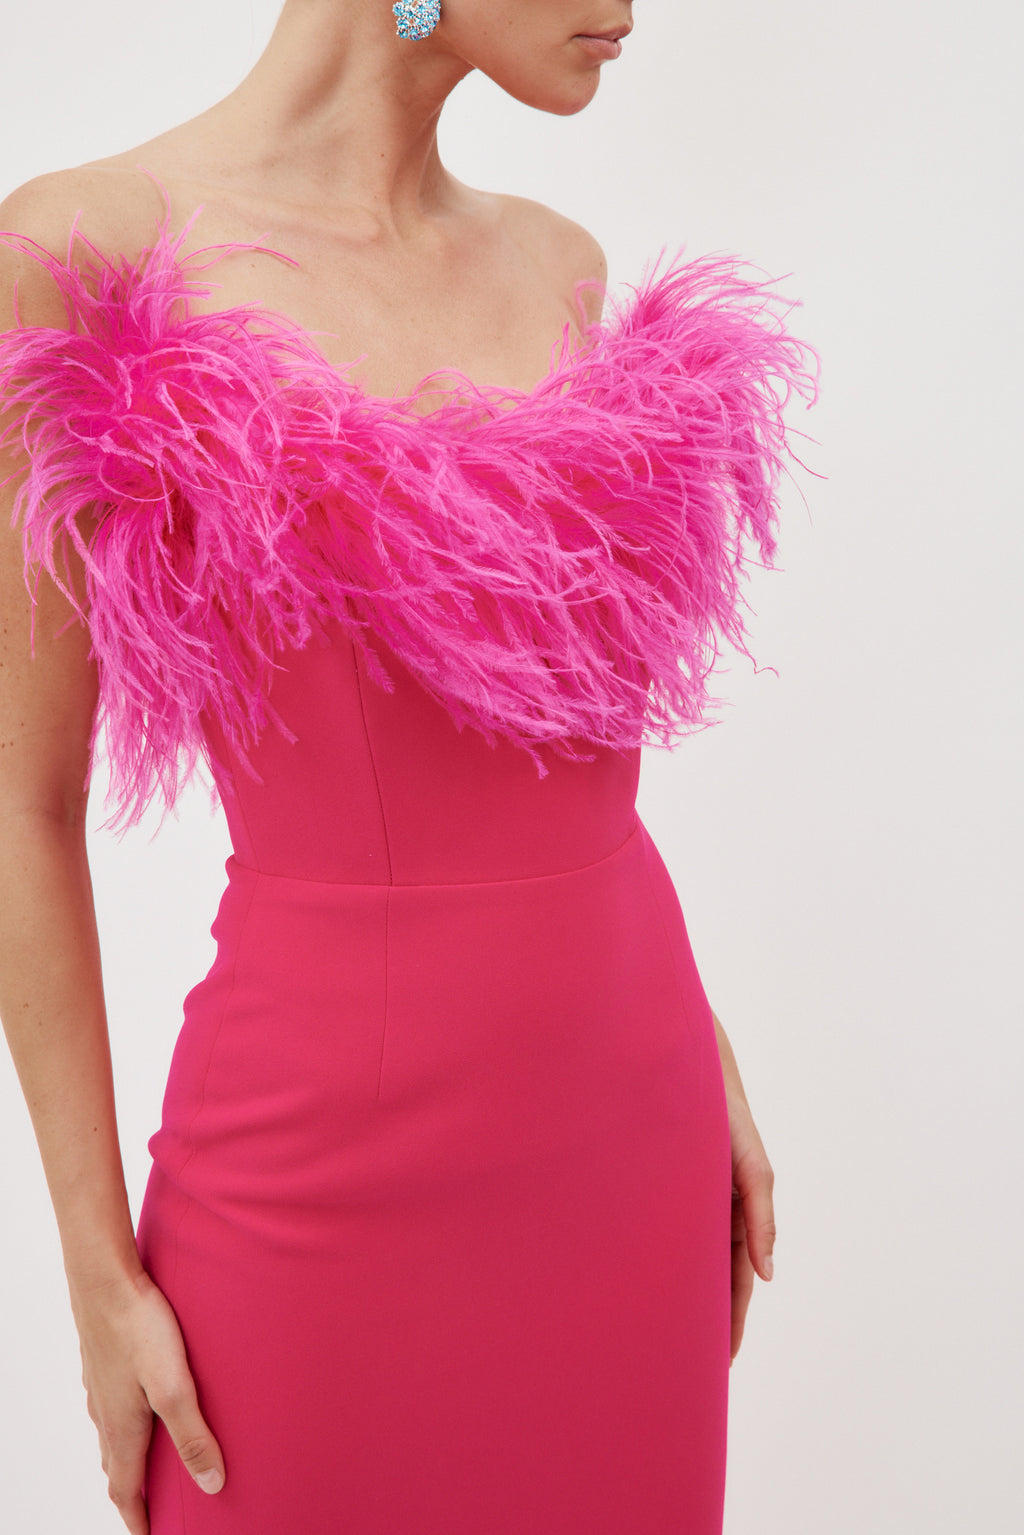 Lena Hot Pink Dress